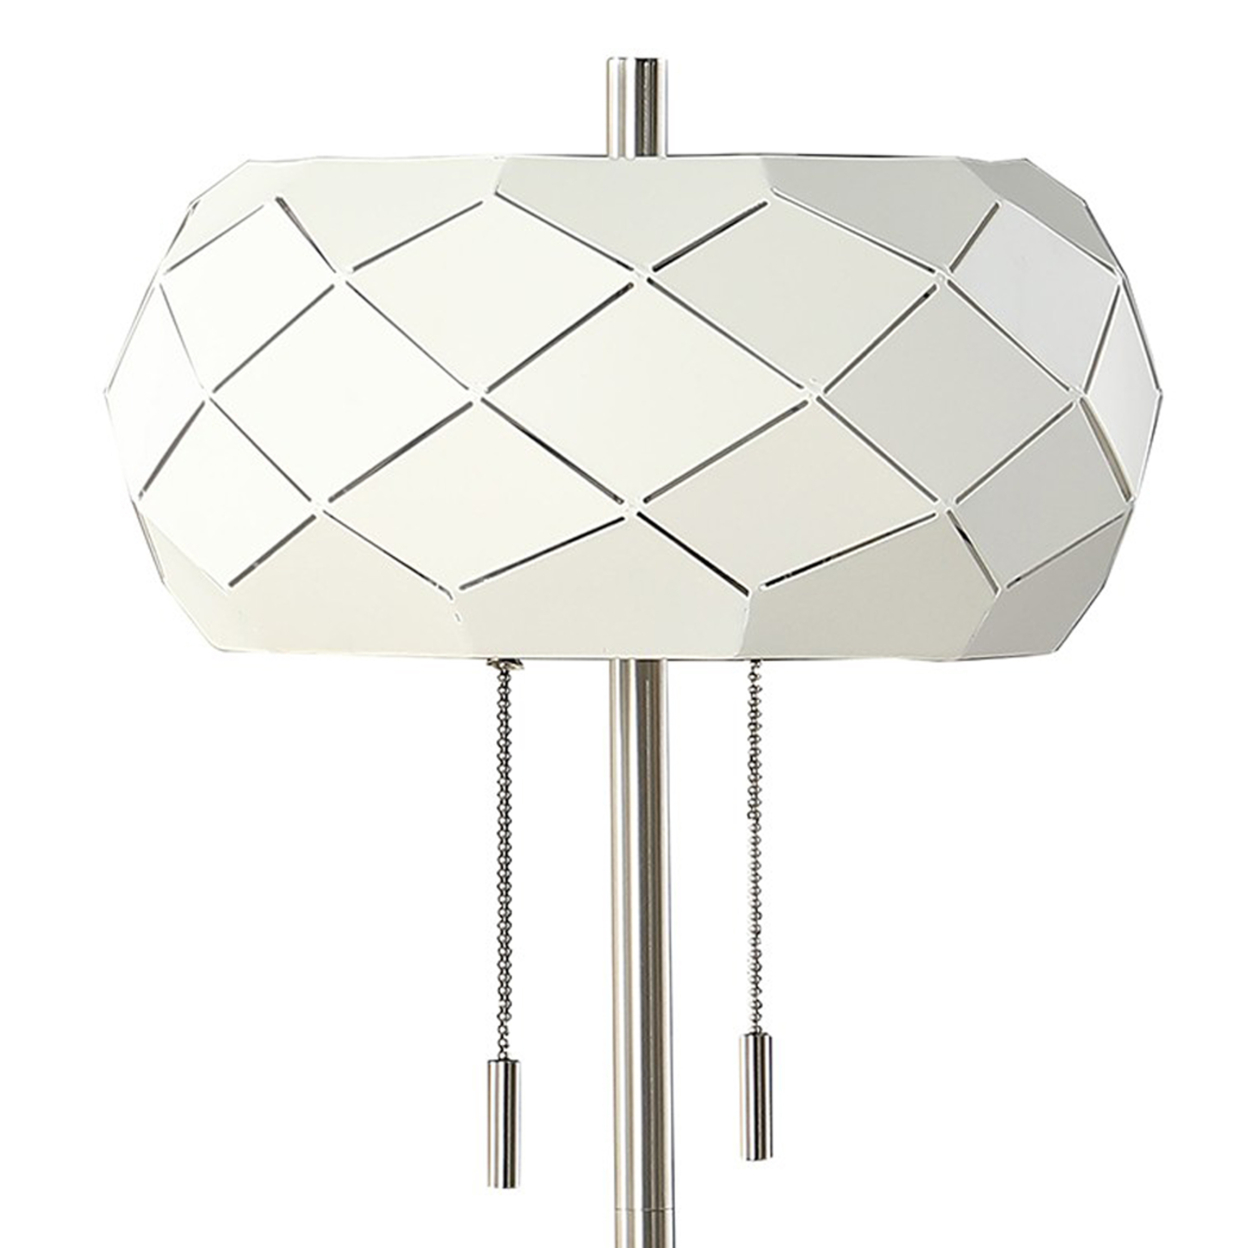 28 Inch Accent Table Lamp, Geometric Drum Shade, Metal Base, White, Silver- Saltoro Sherpi